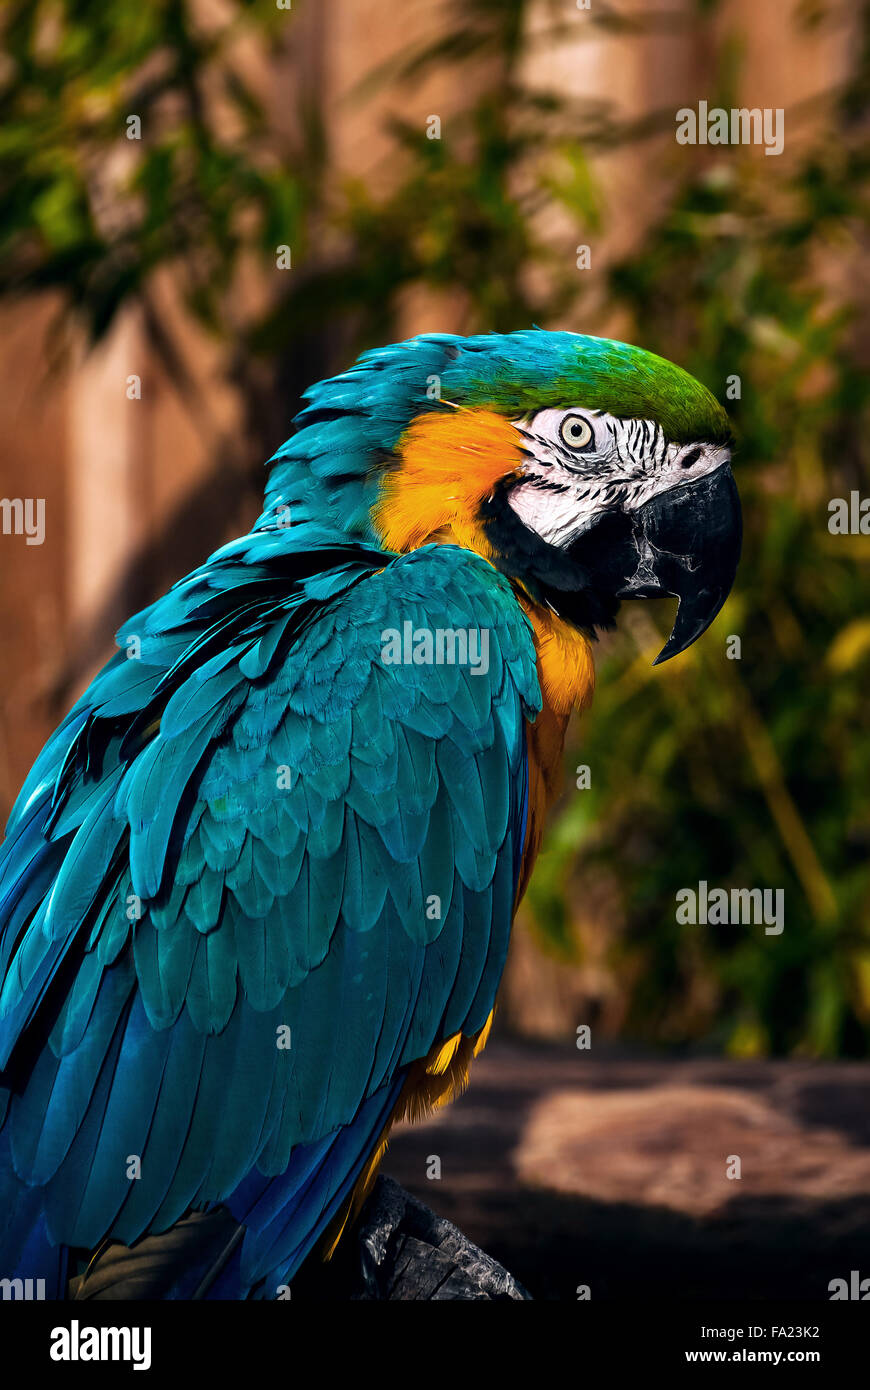 Blue green orange macaw talking parrot portrait closeup Stock Photo - Alamy